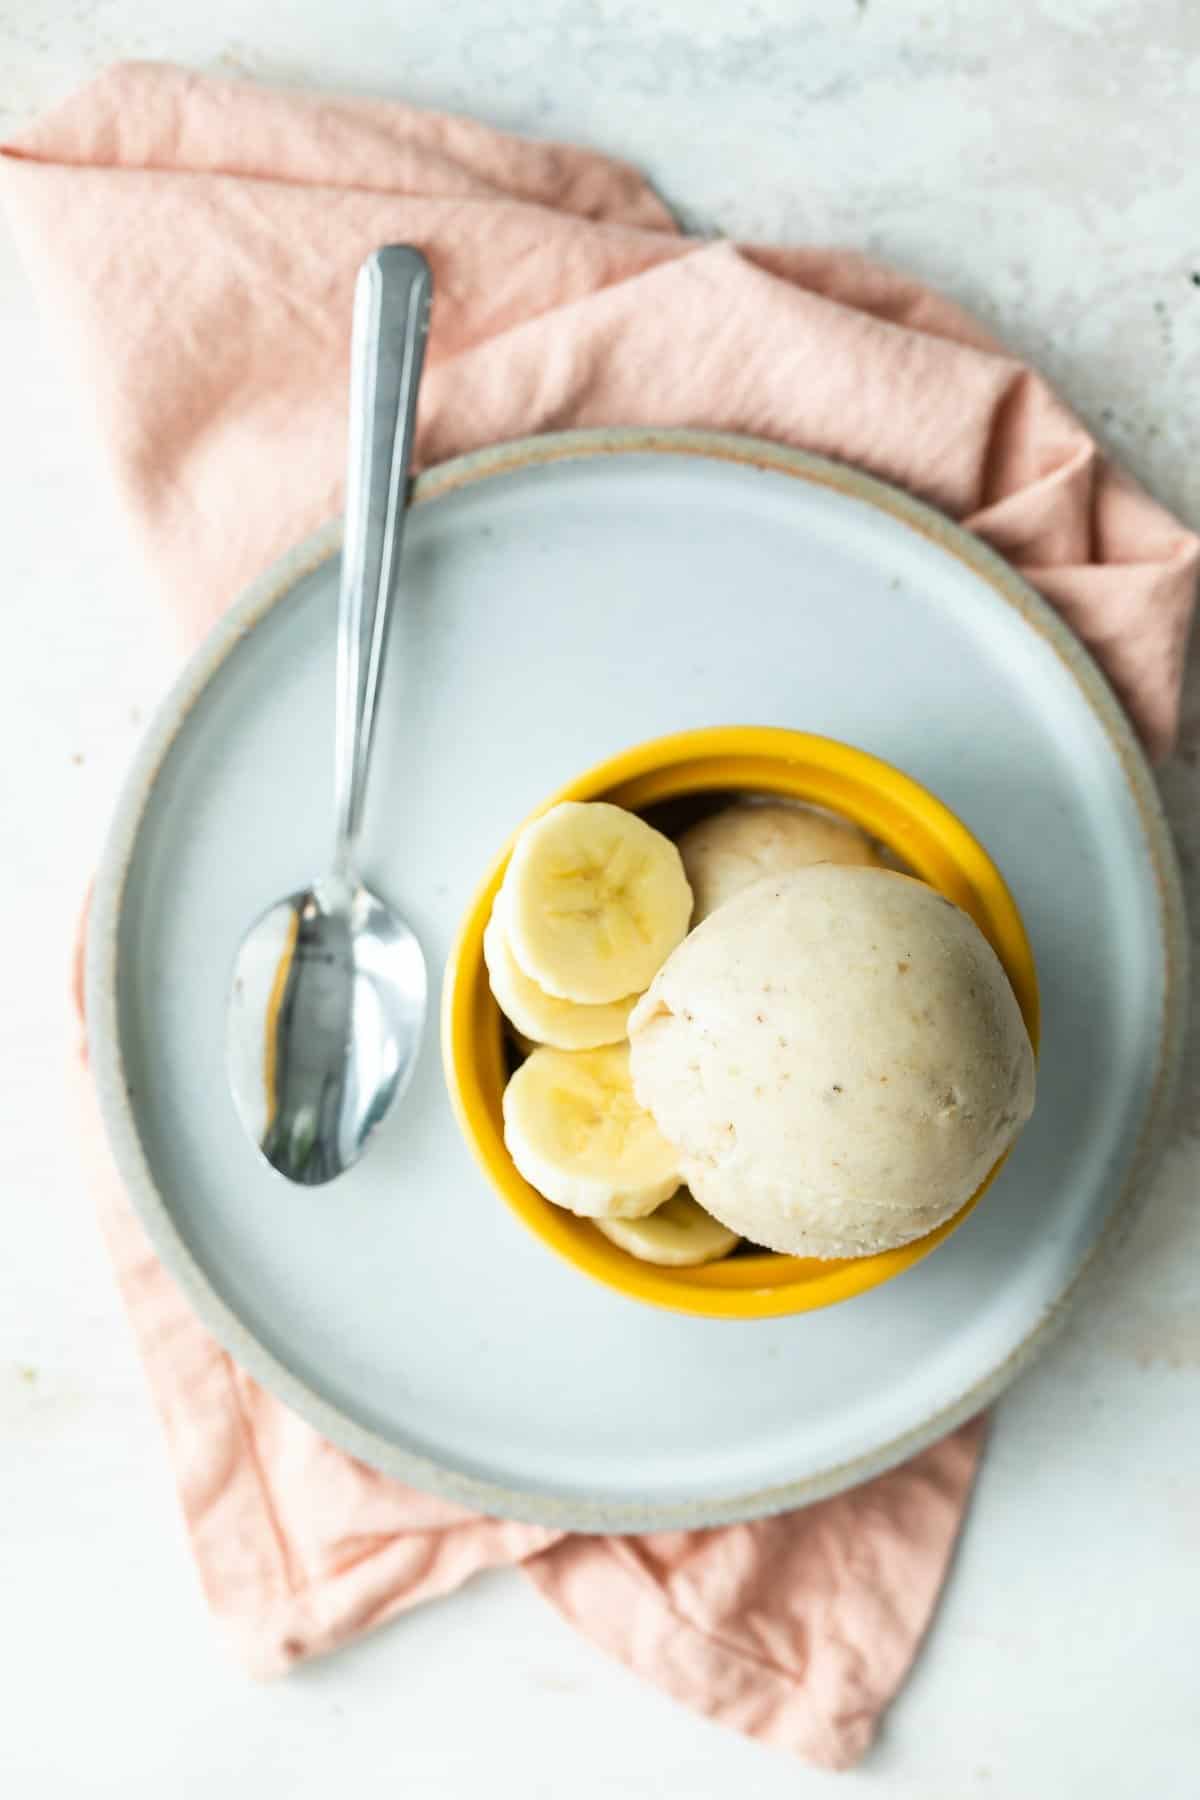 Frozen yogurt with fresh banana slices.